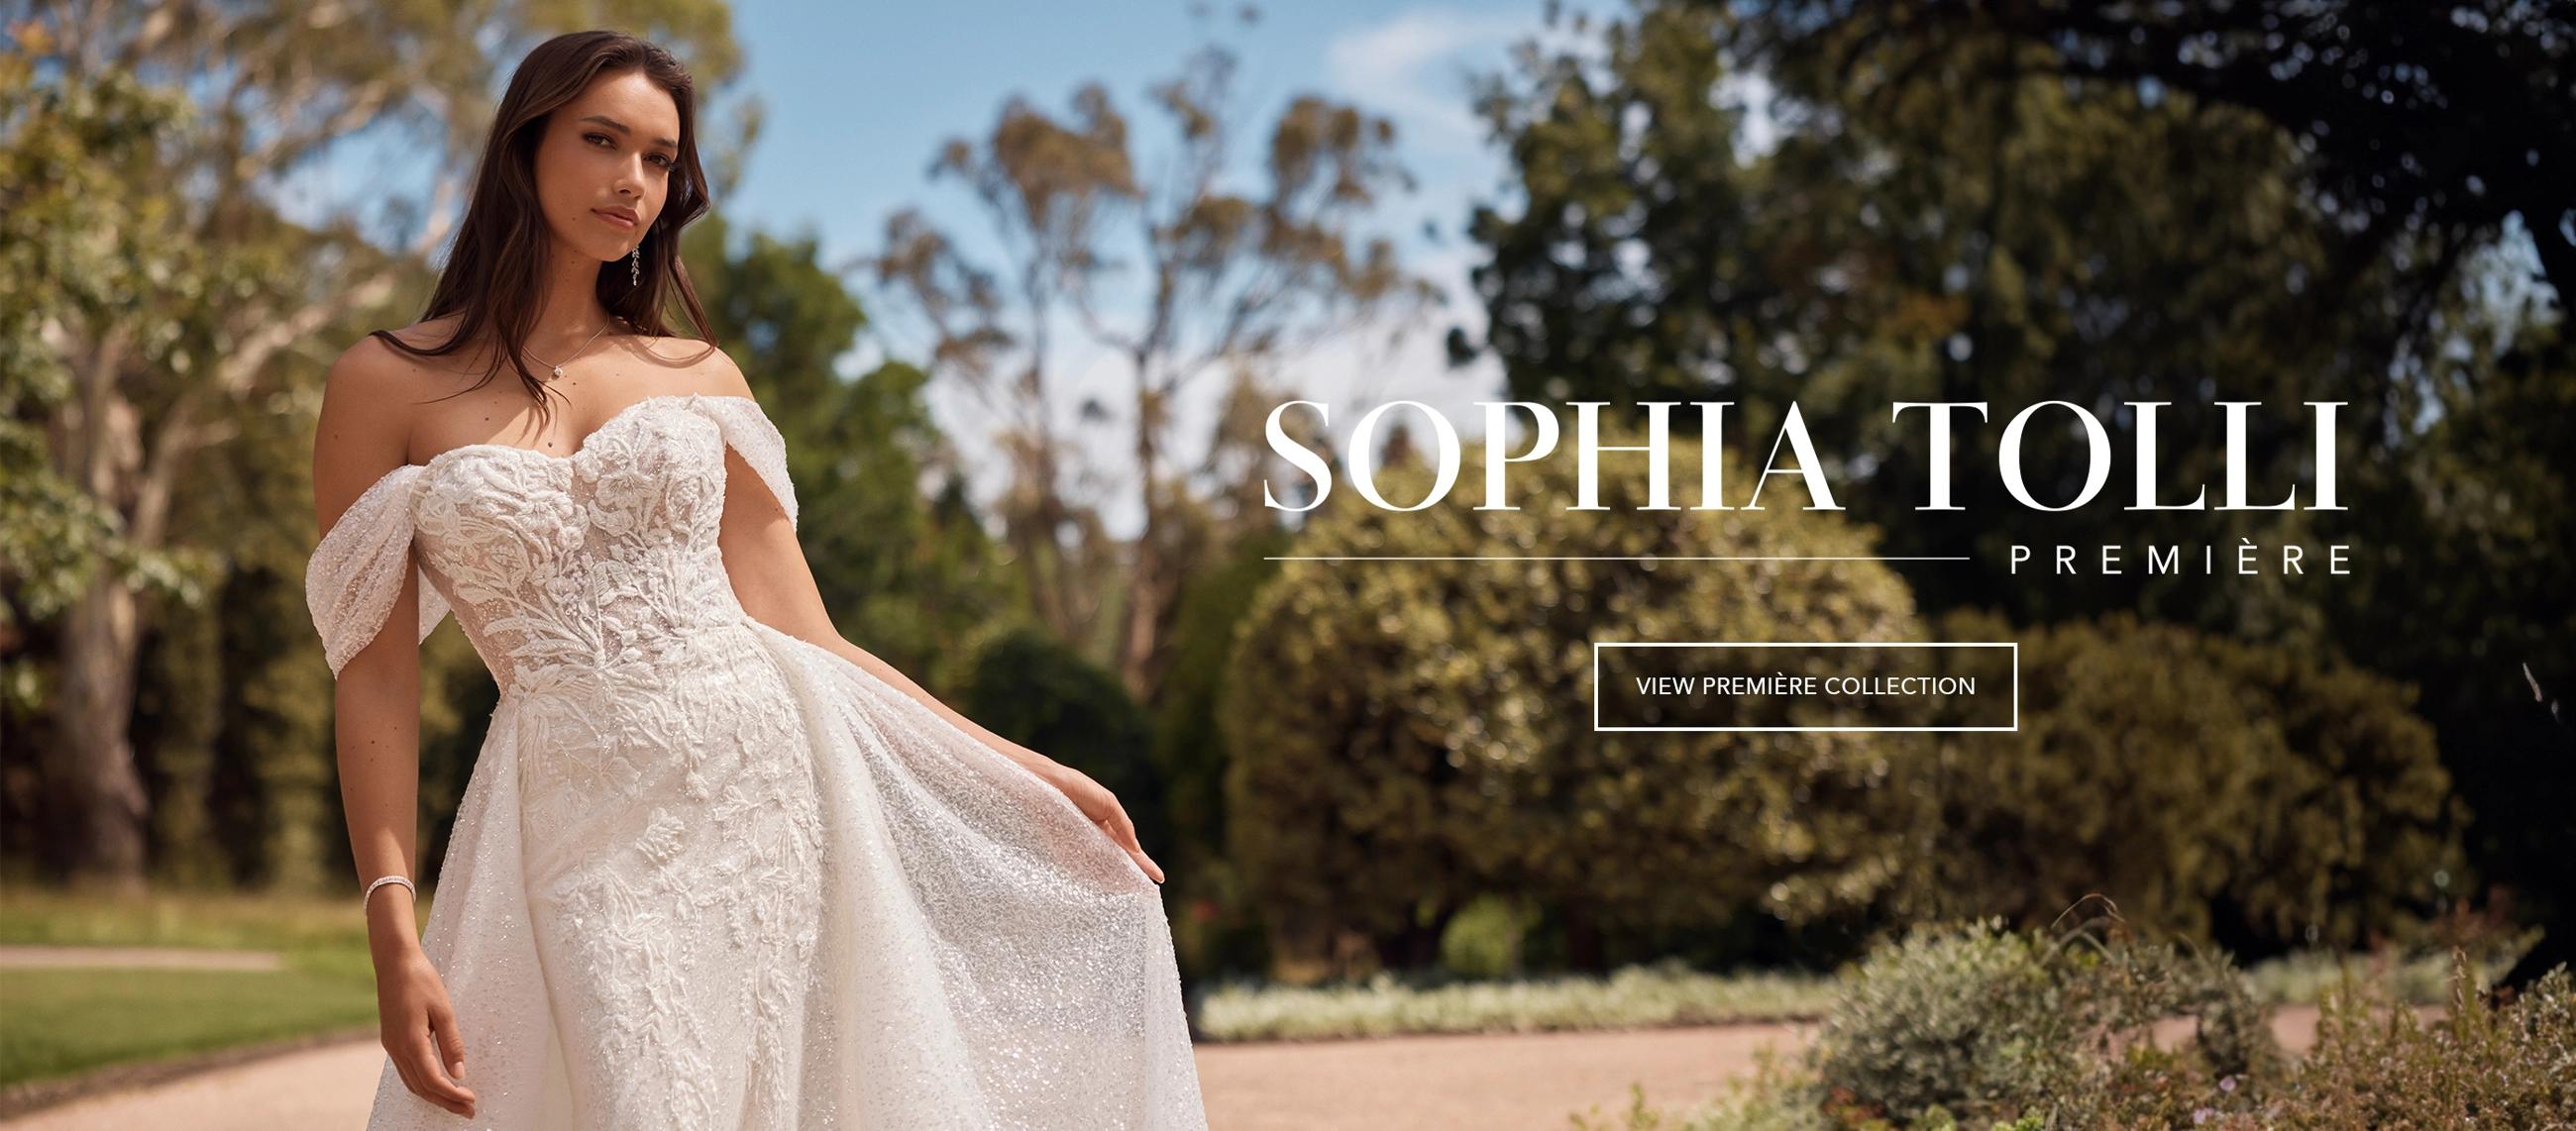 Sophia Tolli Première Wedding Dresses Desktop Image